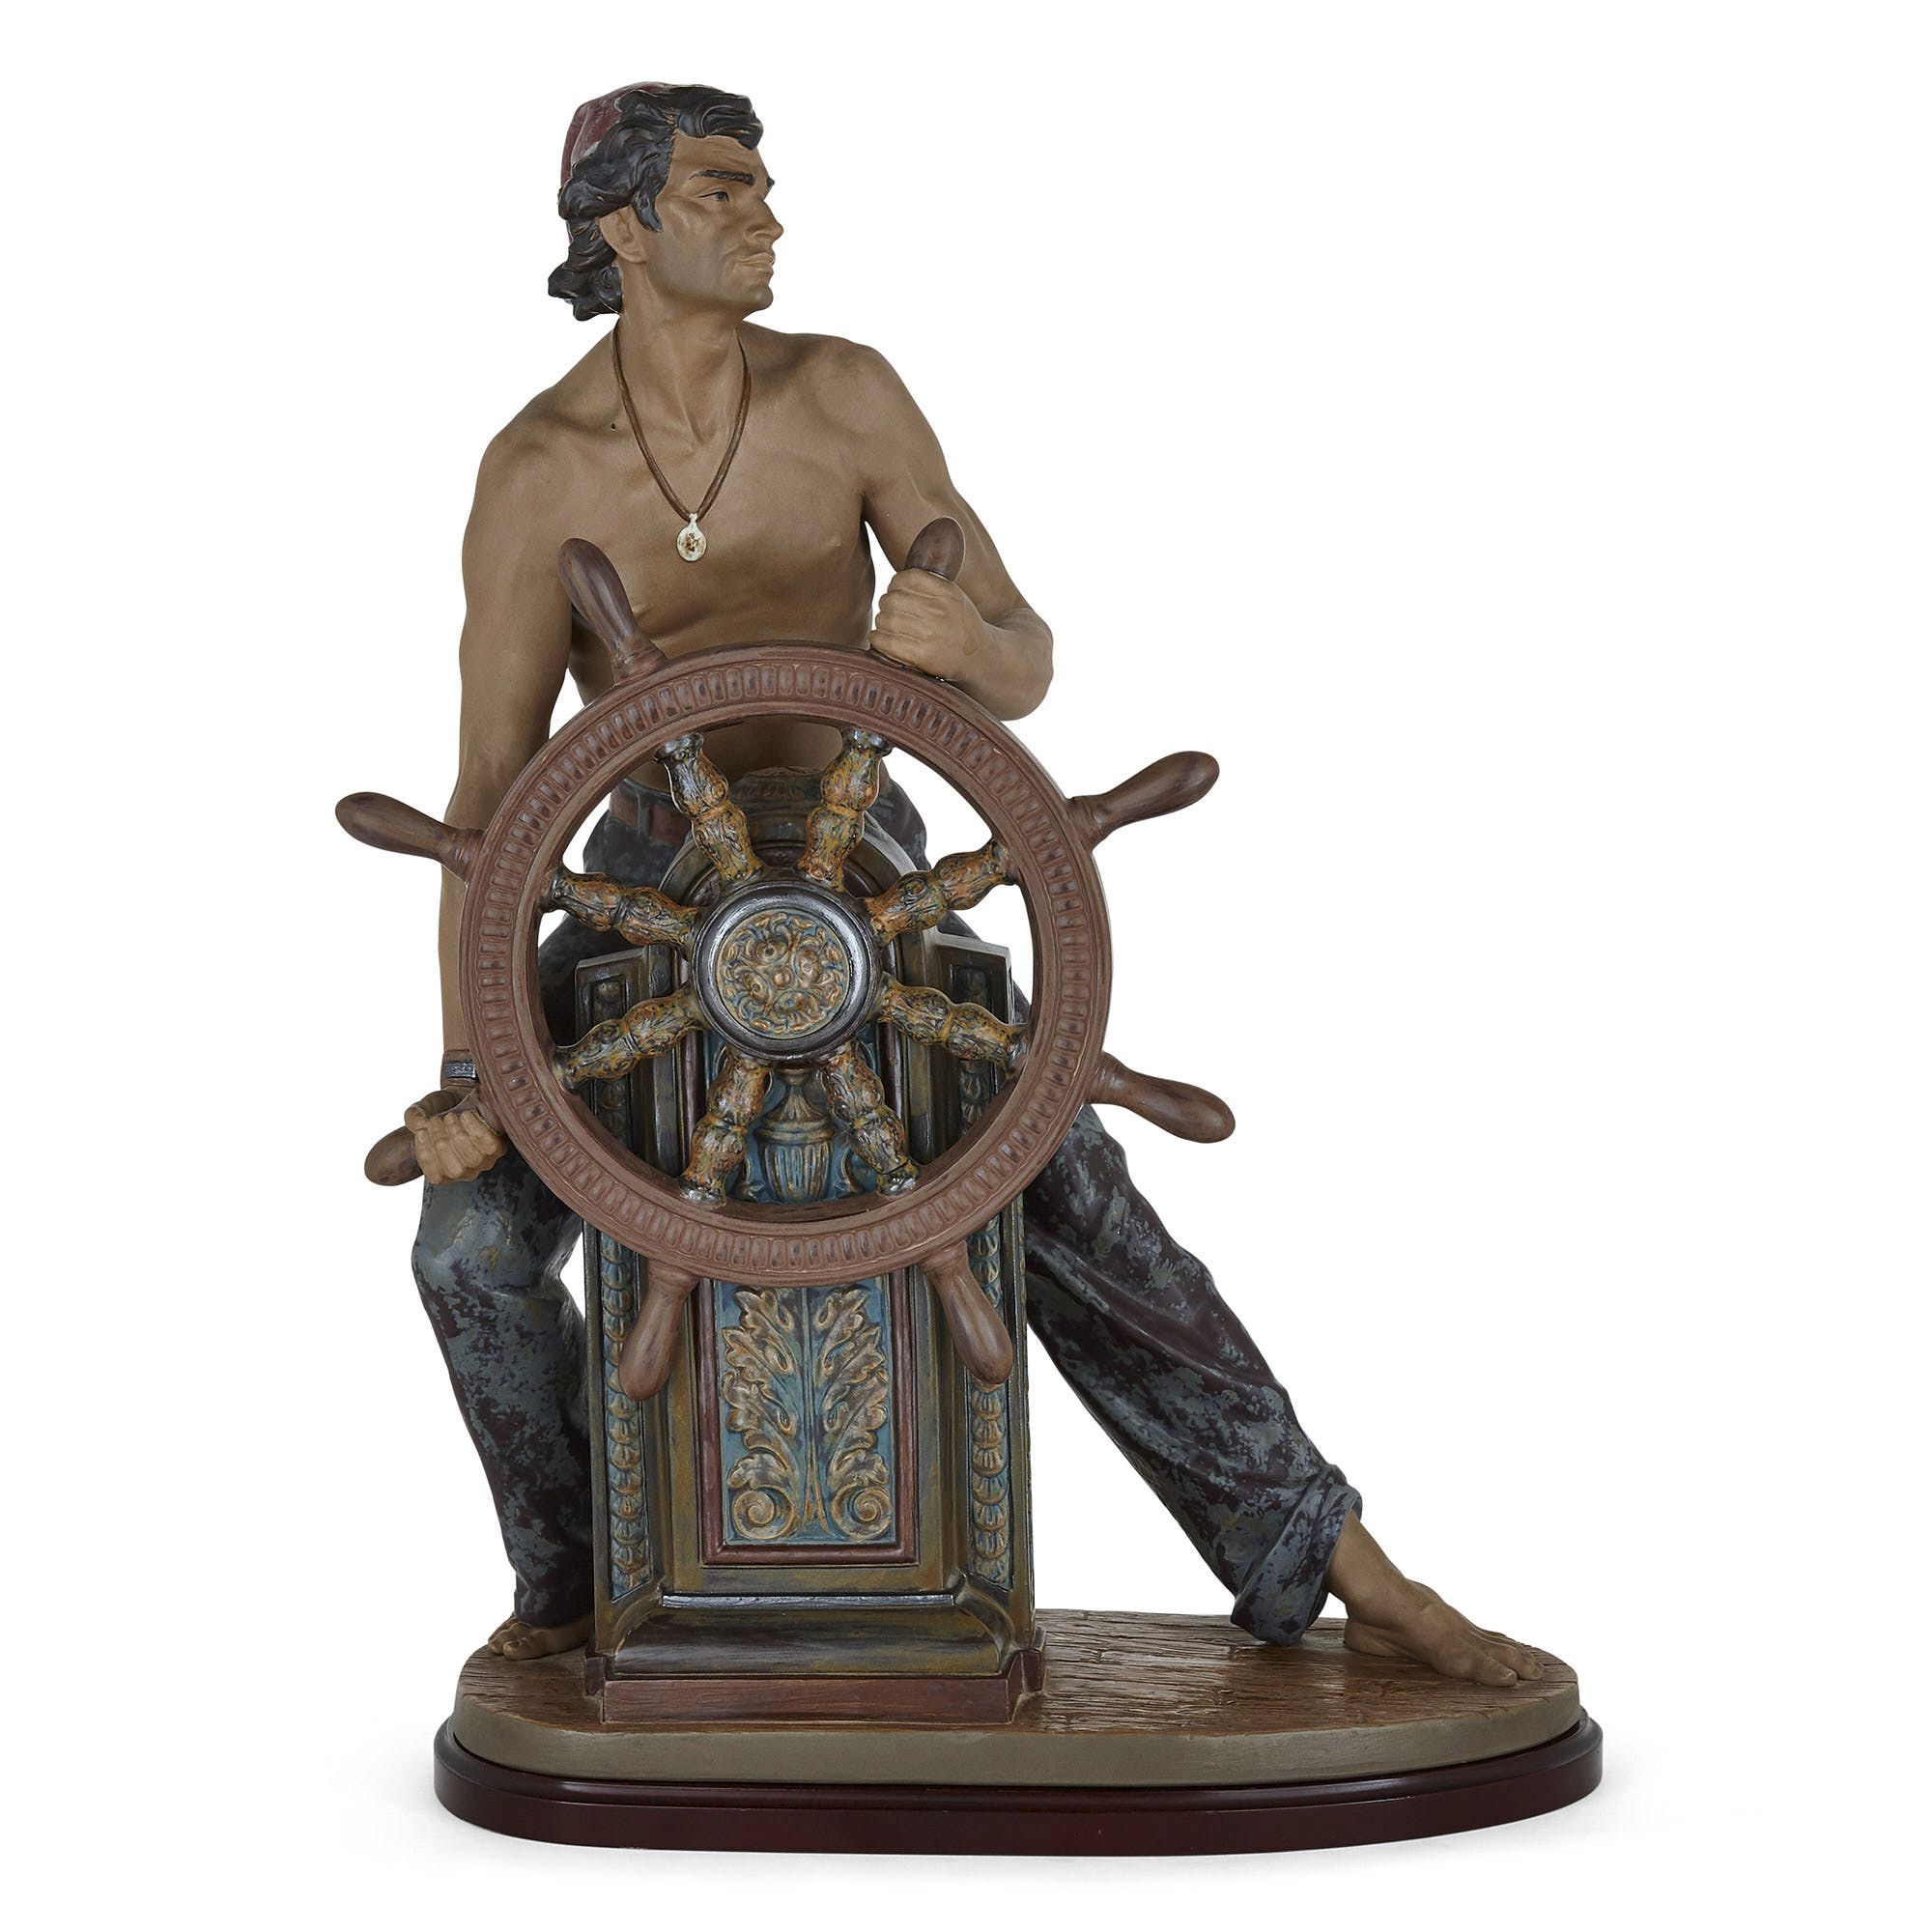 Spanish ceramic sculpture of a seafarer by Lladró